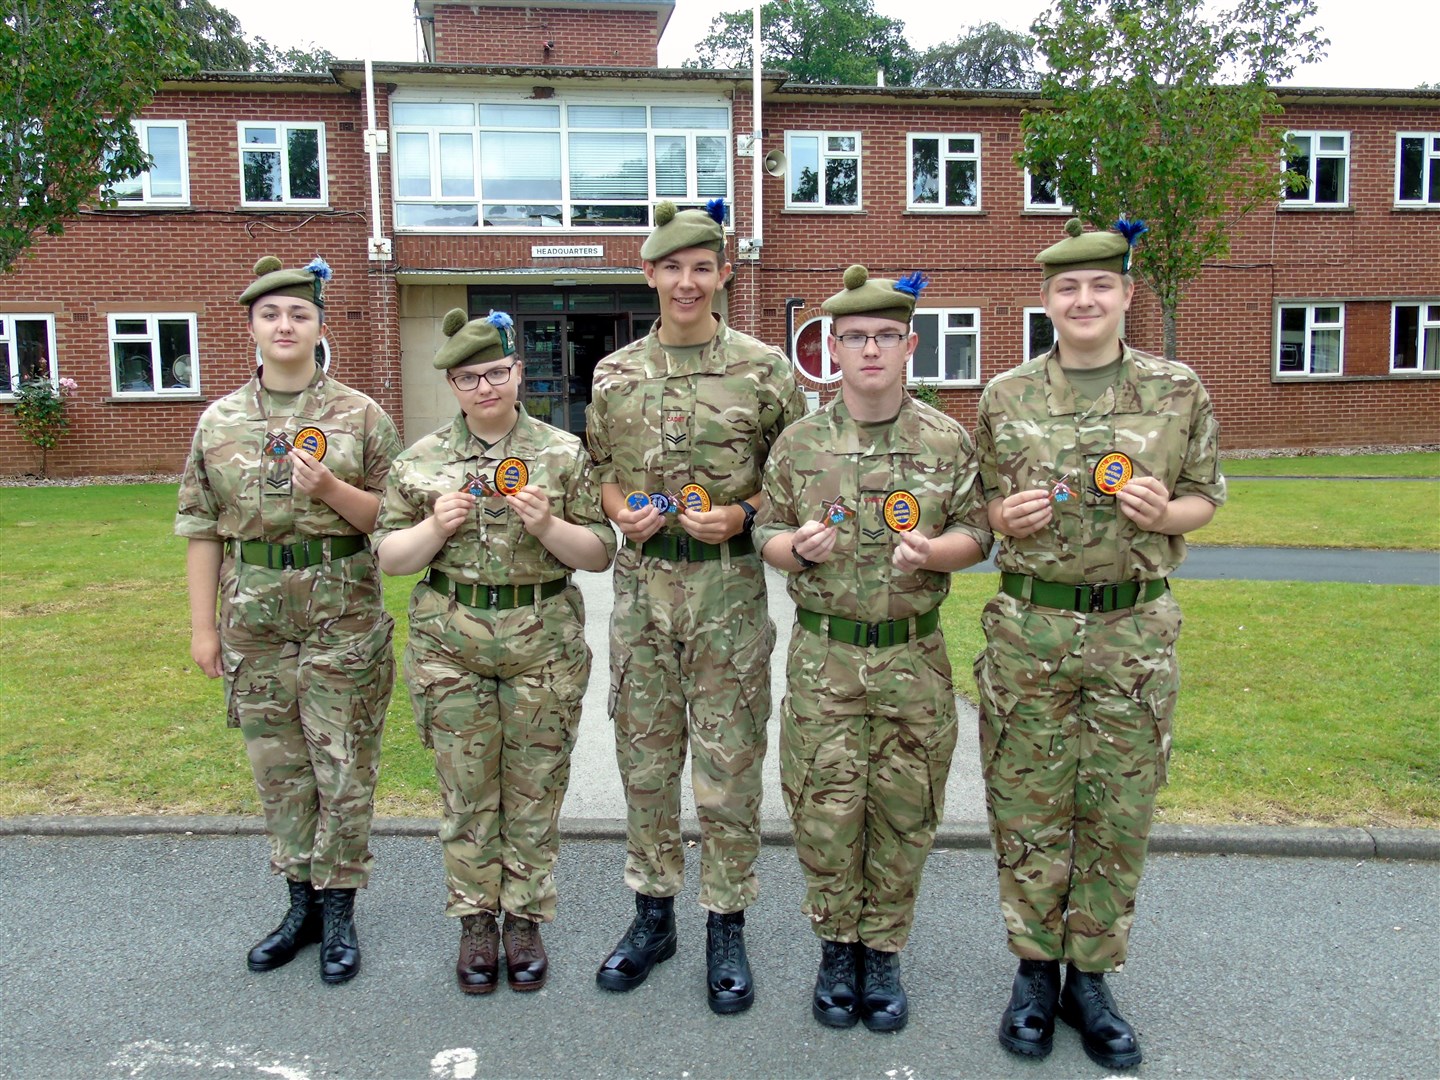 Inter Service Cadet Rifle Team showing off their badges (from left) Cpl Goodman, Cpl Calder, Cpl Tait, Cpl Hayllar and Cpl Bialkowski.